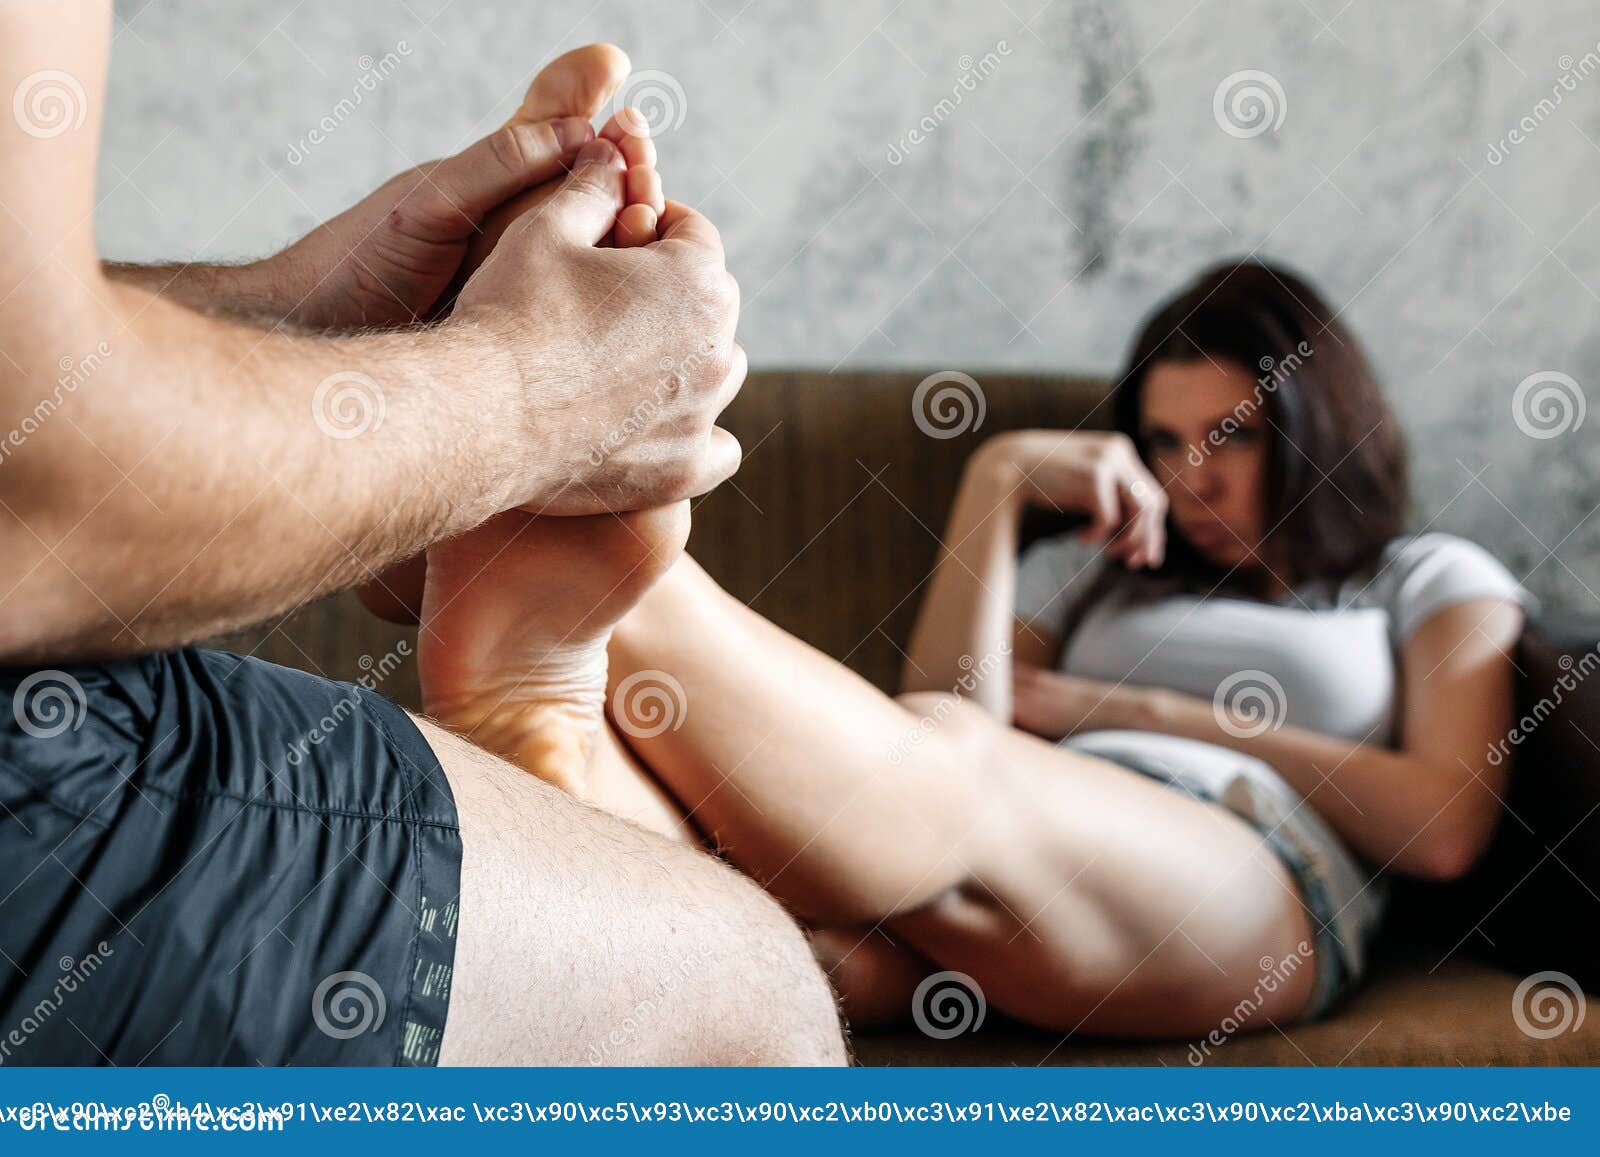 amateur video wife massage husband